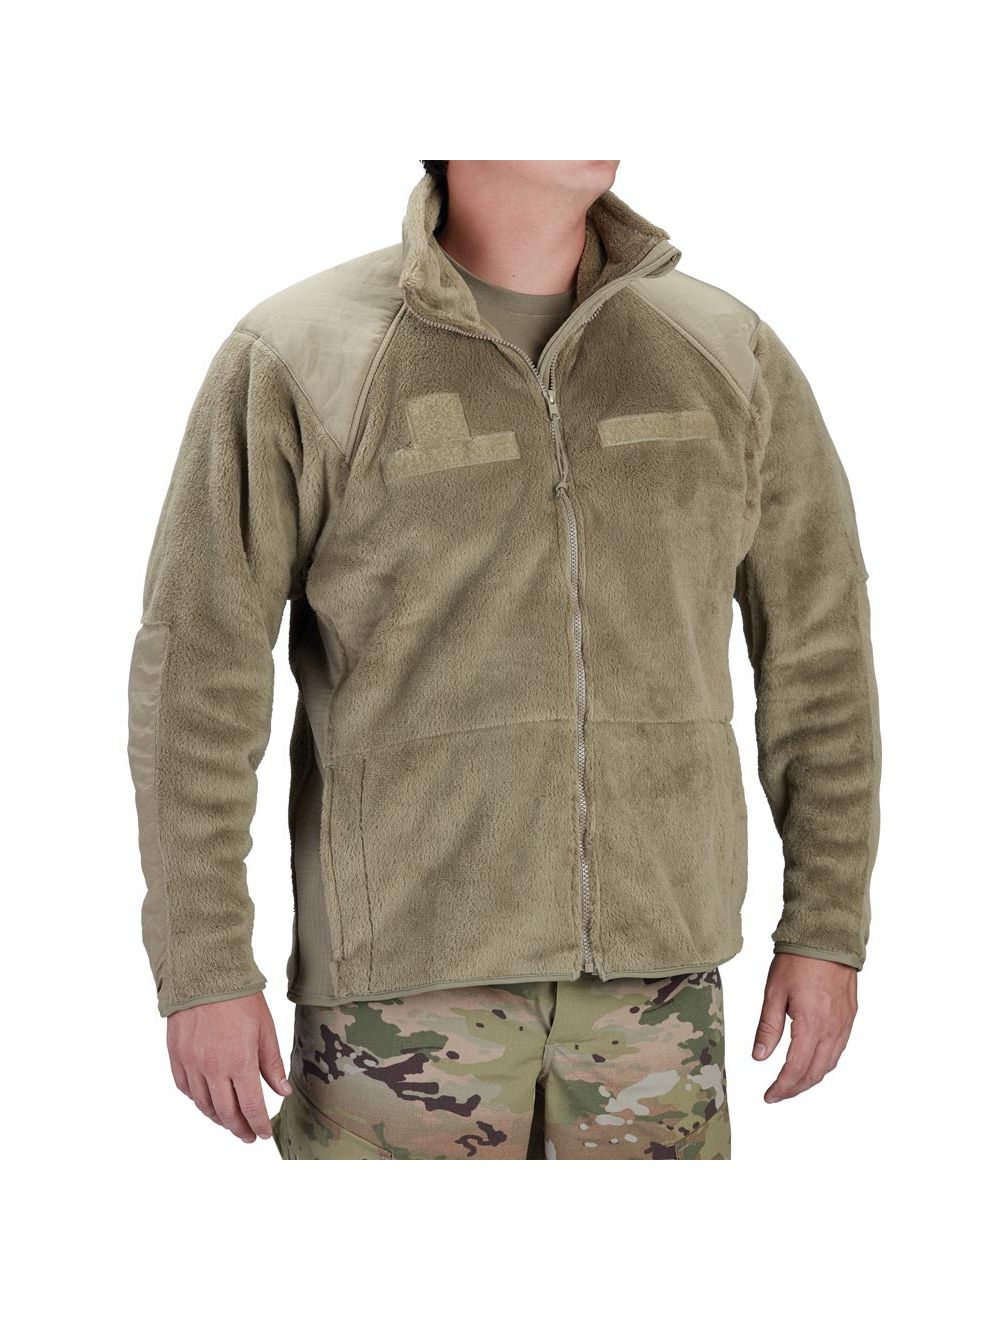 US Army Jacke ECWCS GEN III Polartec Fleece Jacke Jacket Cold Weather Small Reg. 